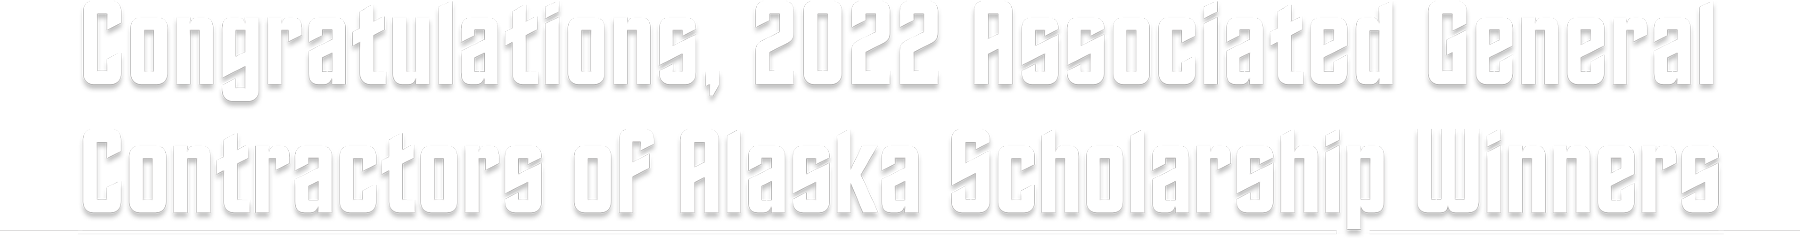 Congratulations, 2022 Associated General Contractors of Alaska Scholarship Winners title